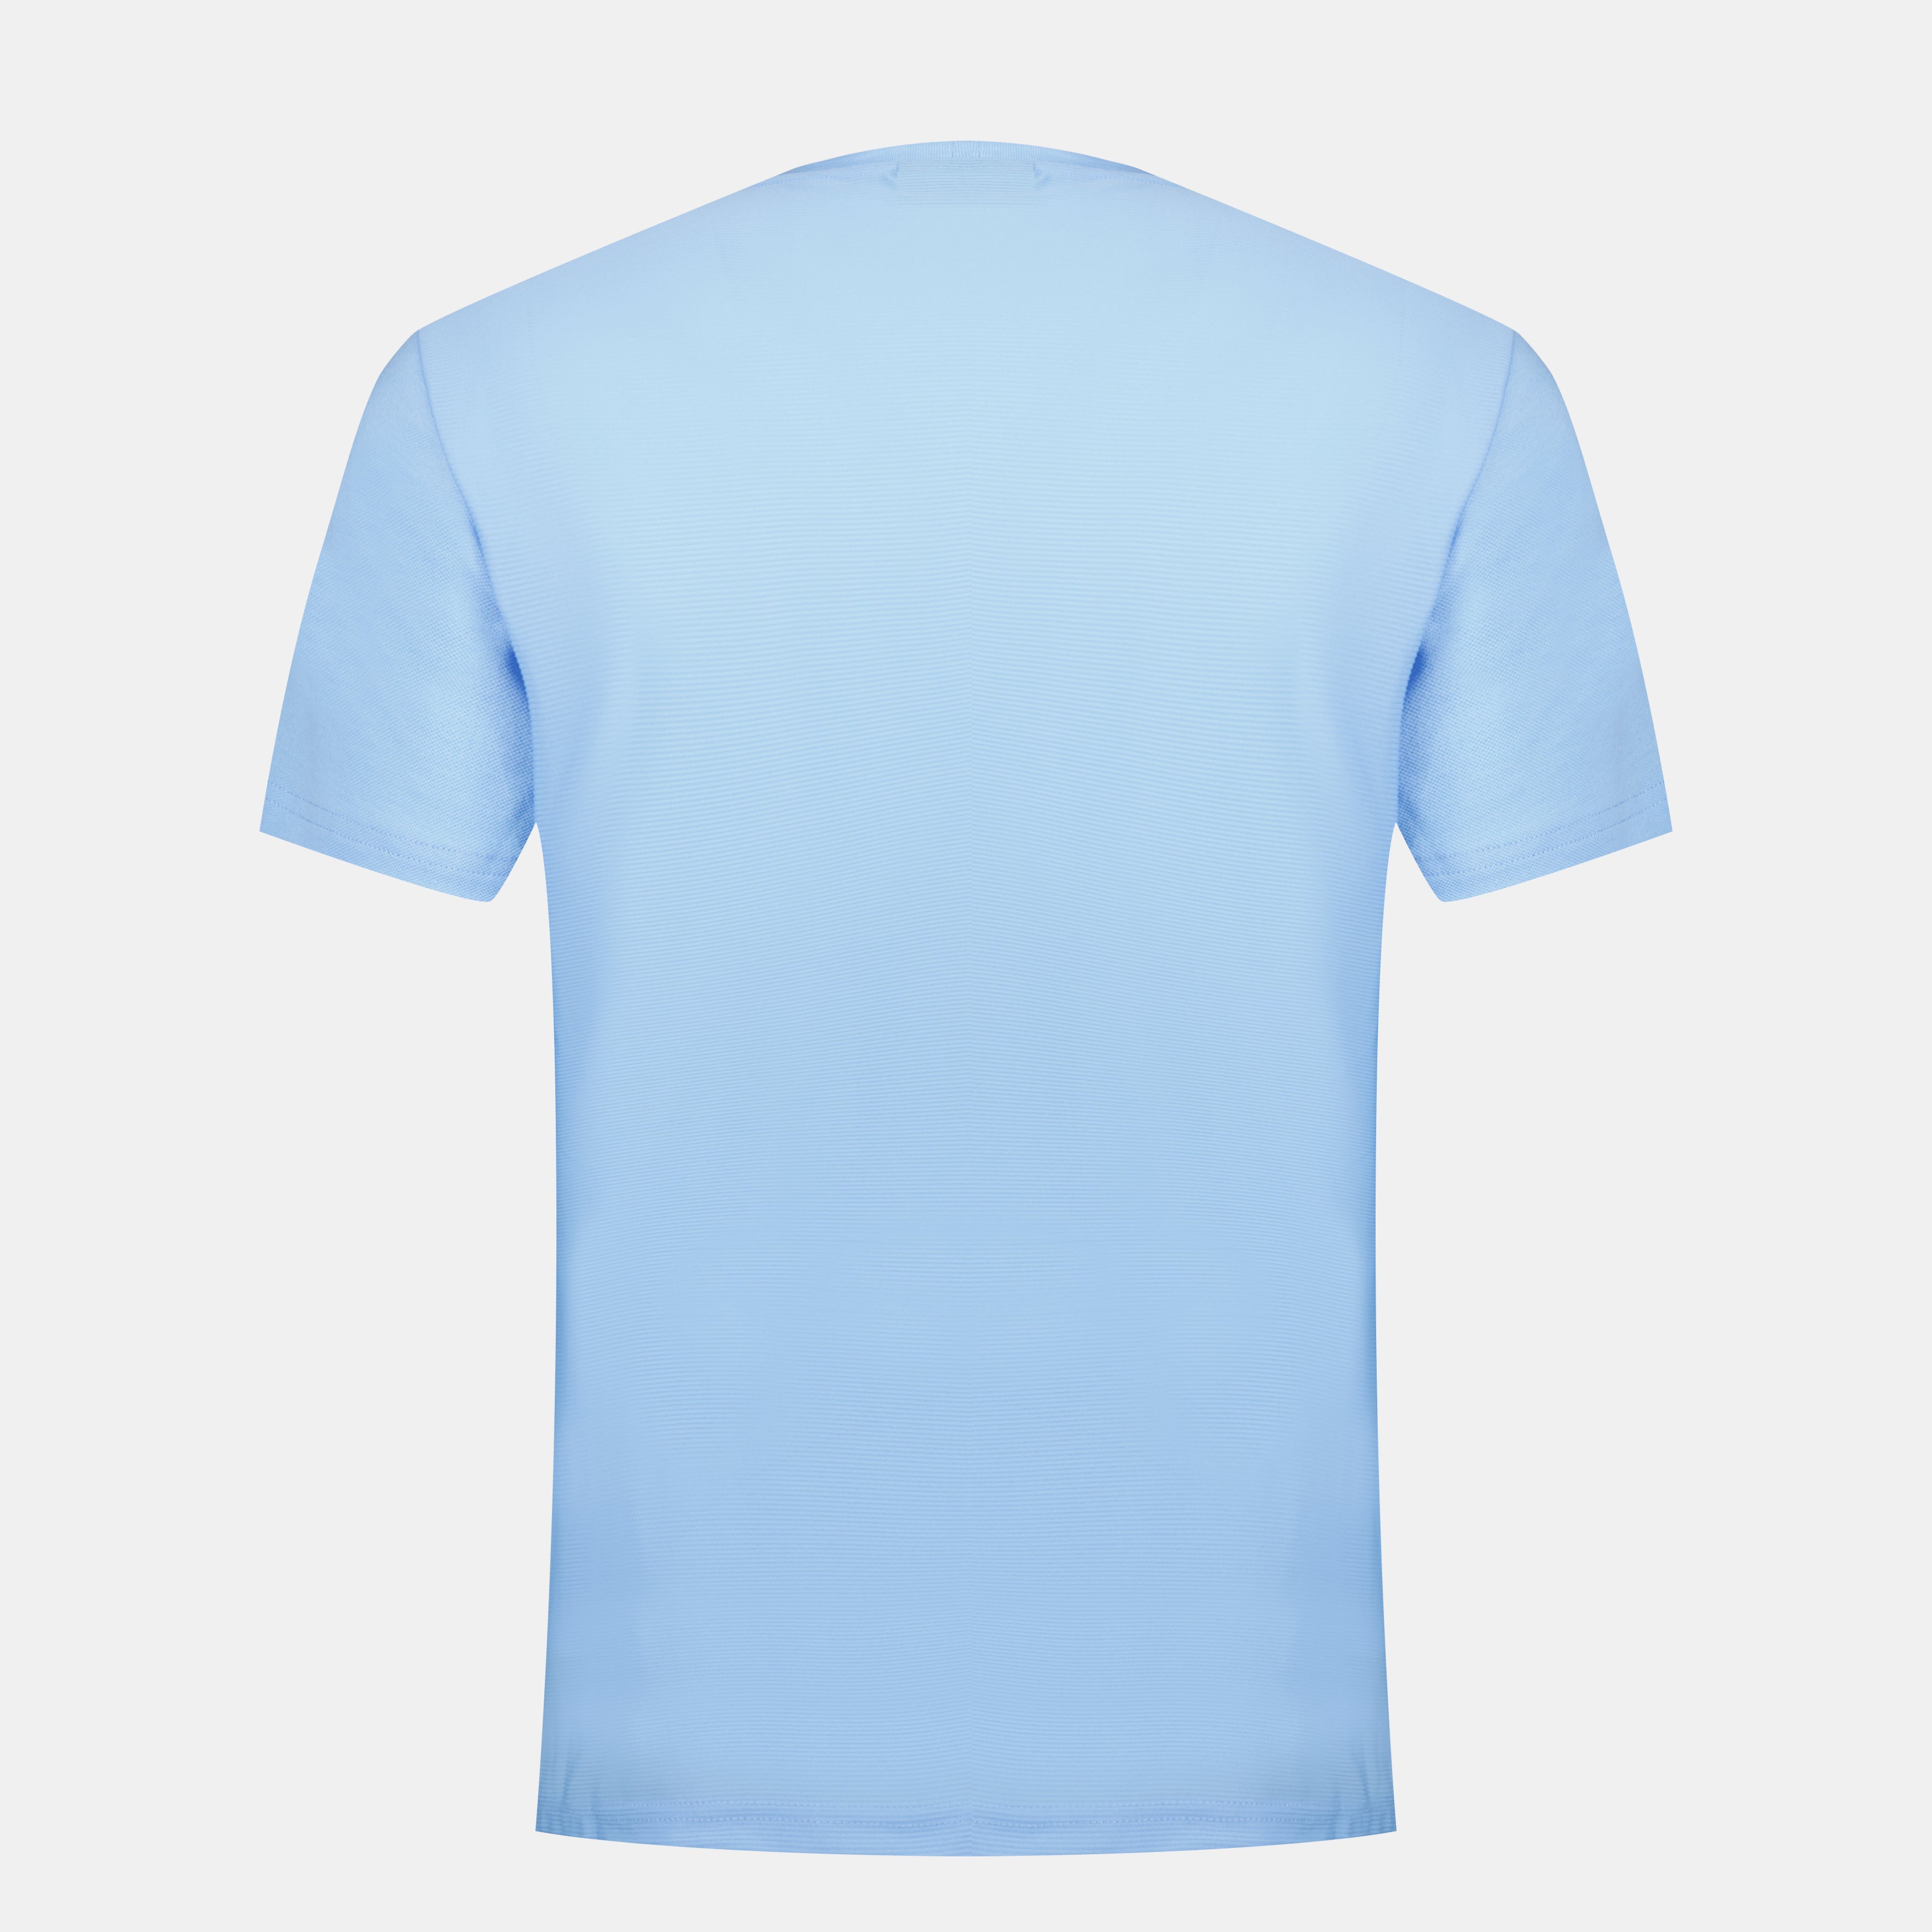 2320134-TENNIS Tee SS N°4 M fly blue  | Camiseta Hombre